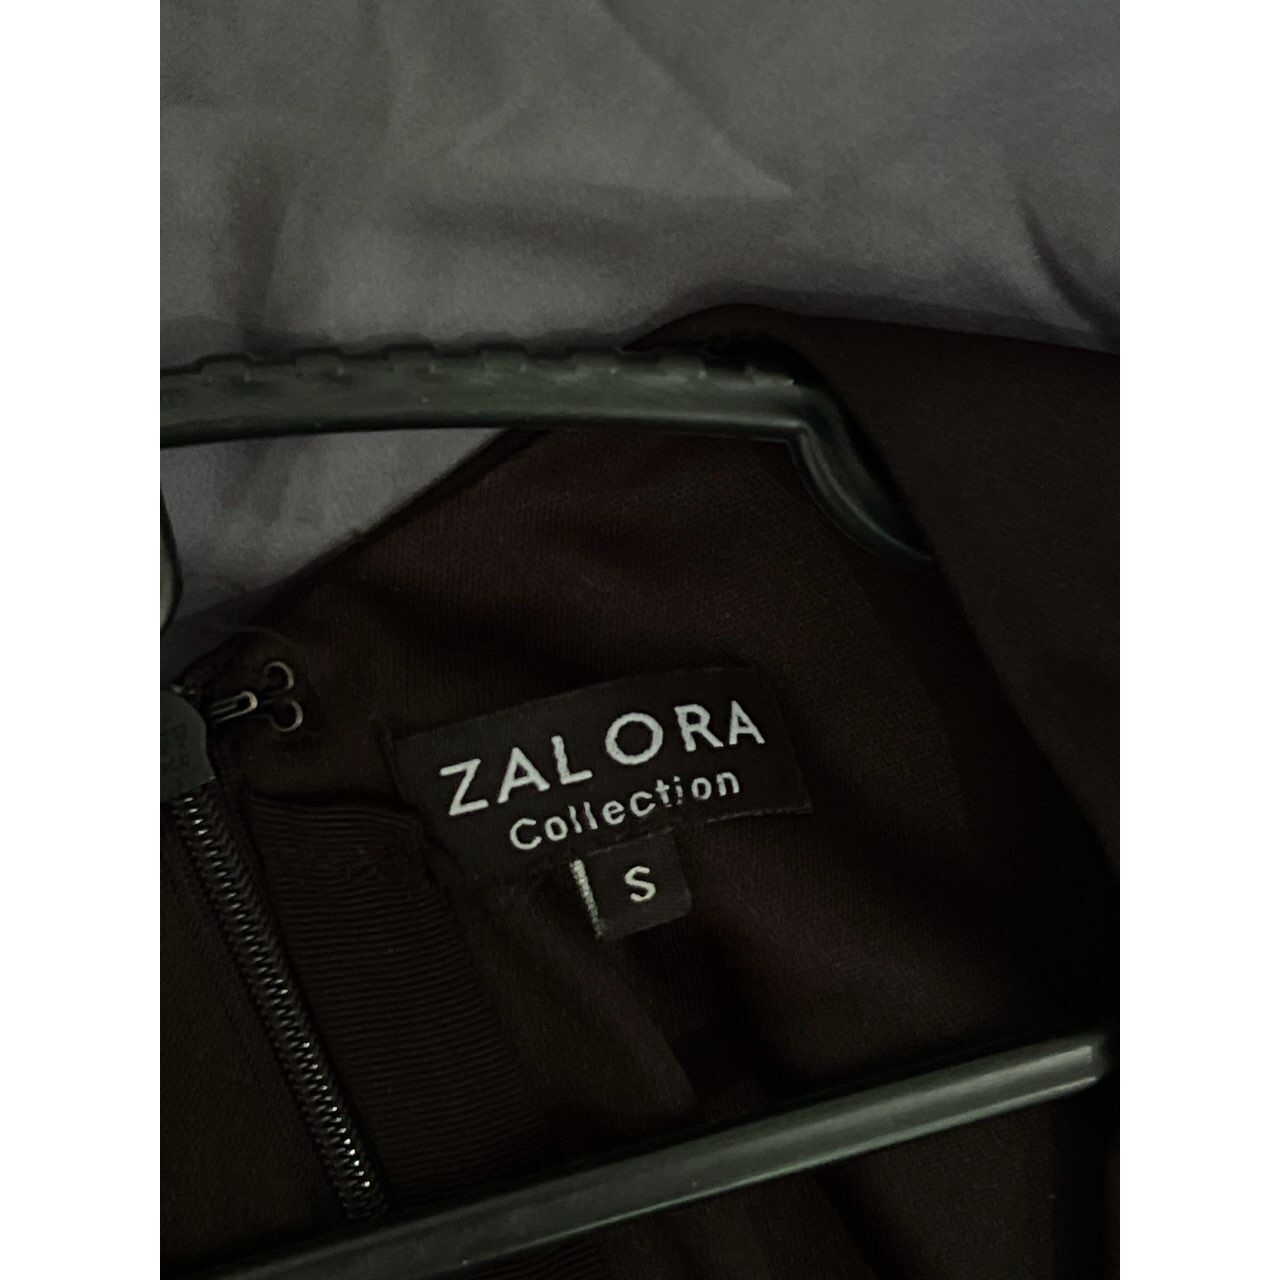 Zalora Black Sleeveless Blouse with Zipper Details